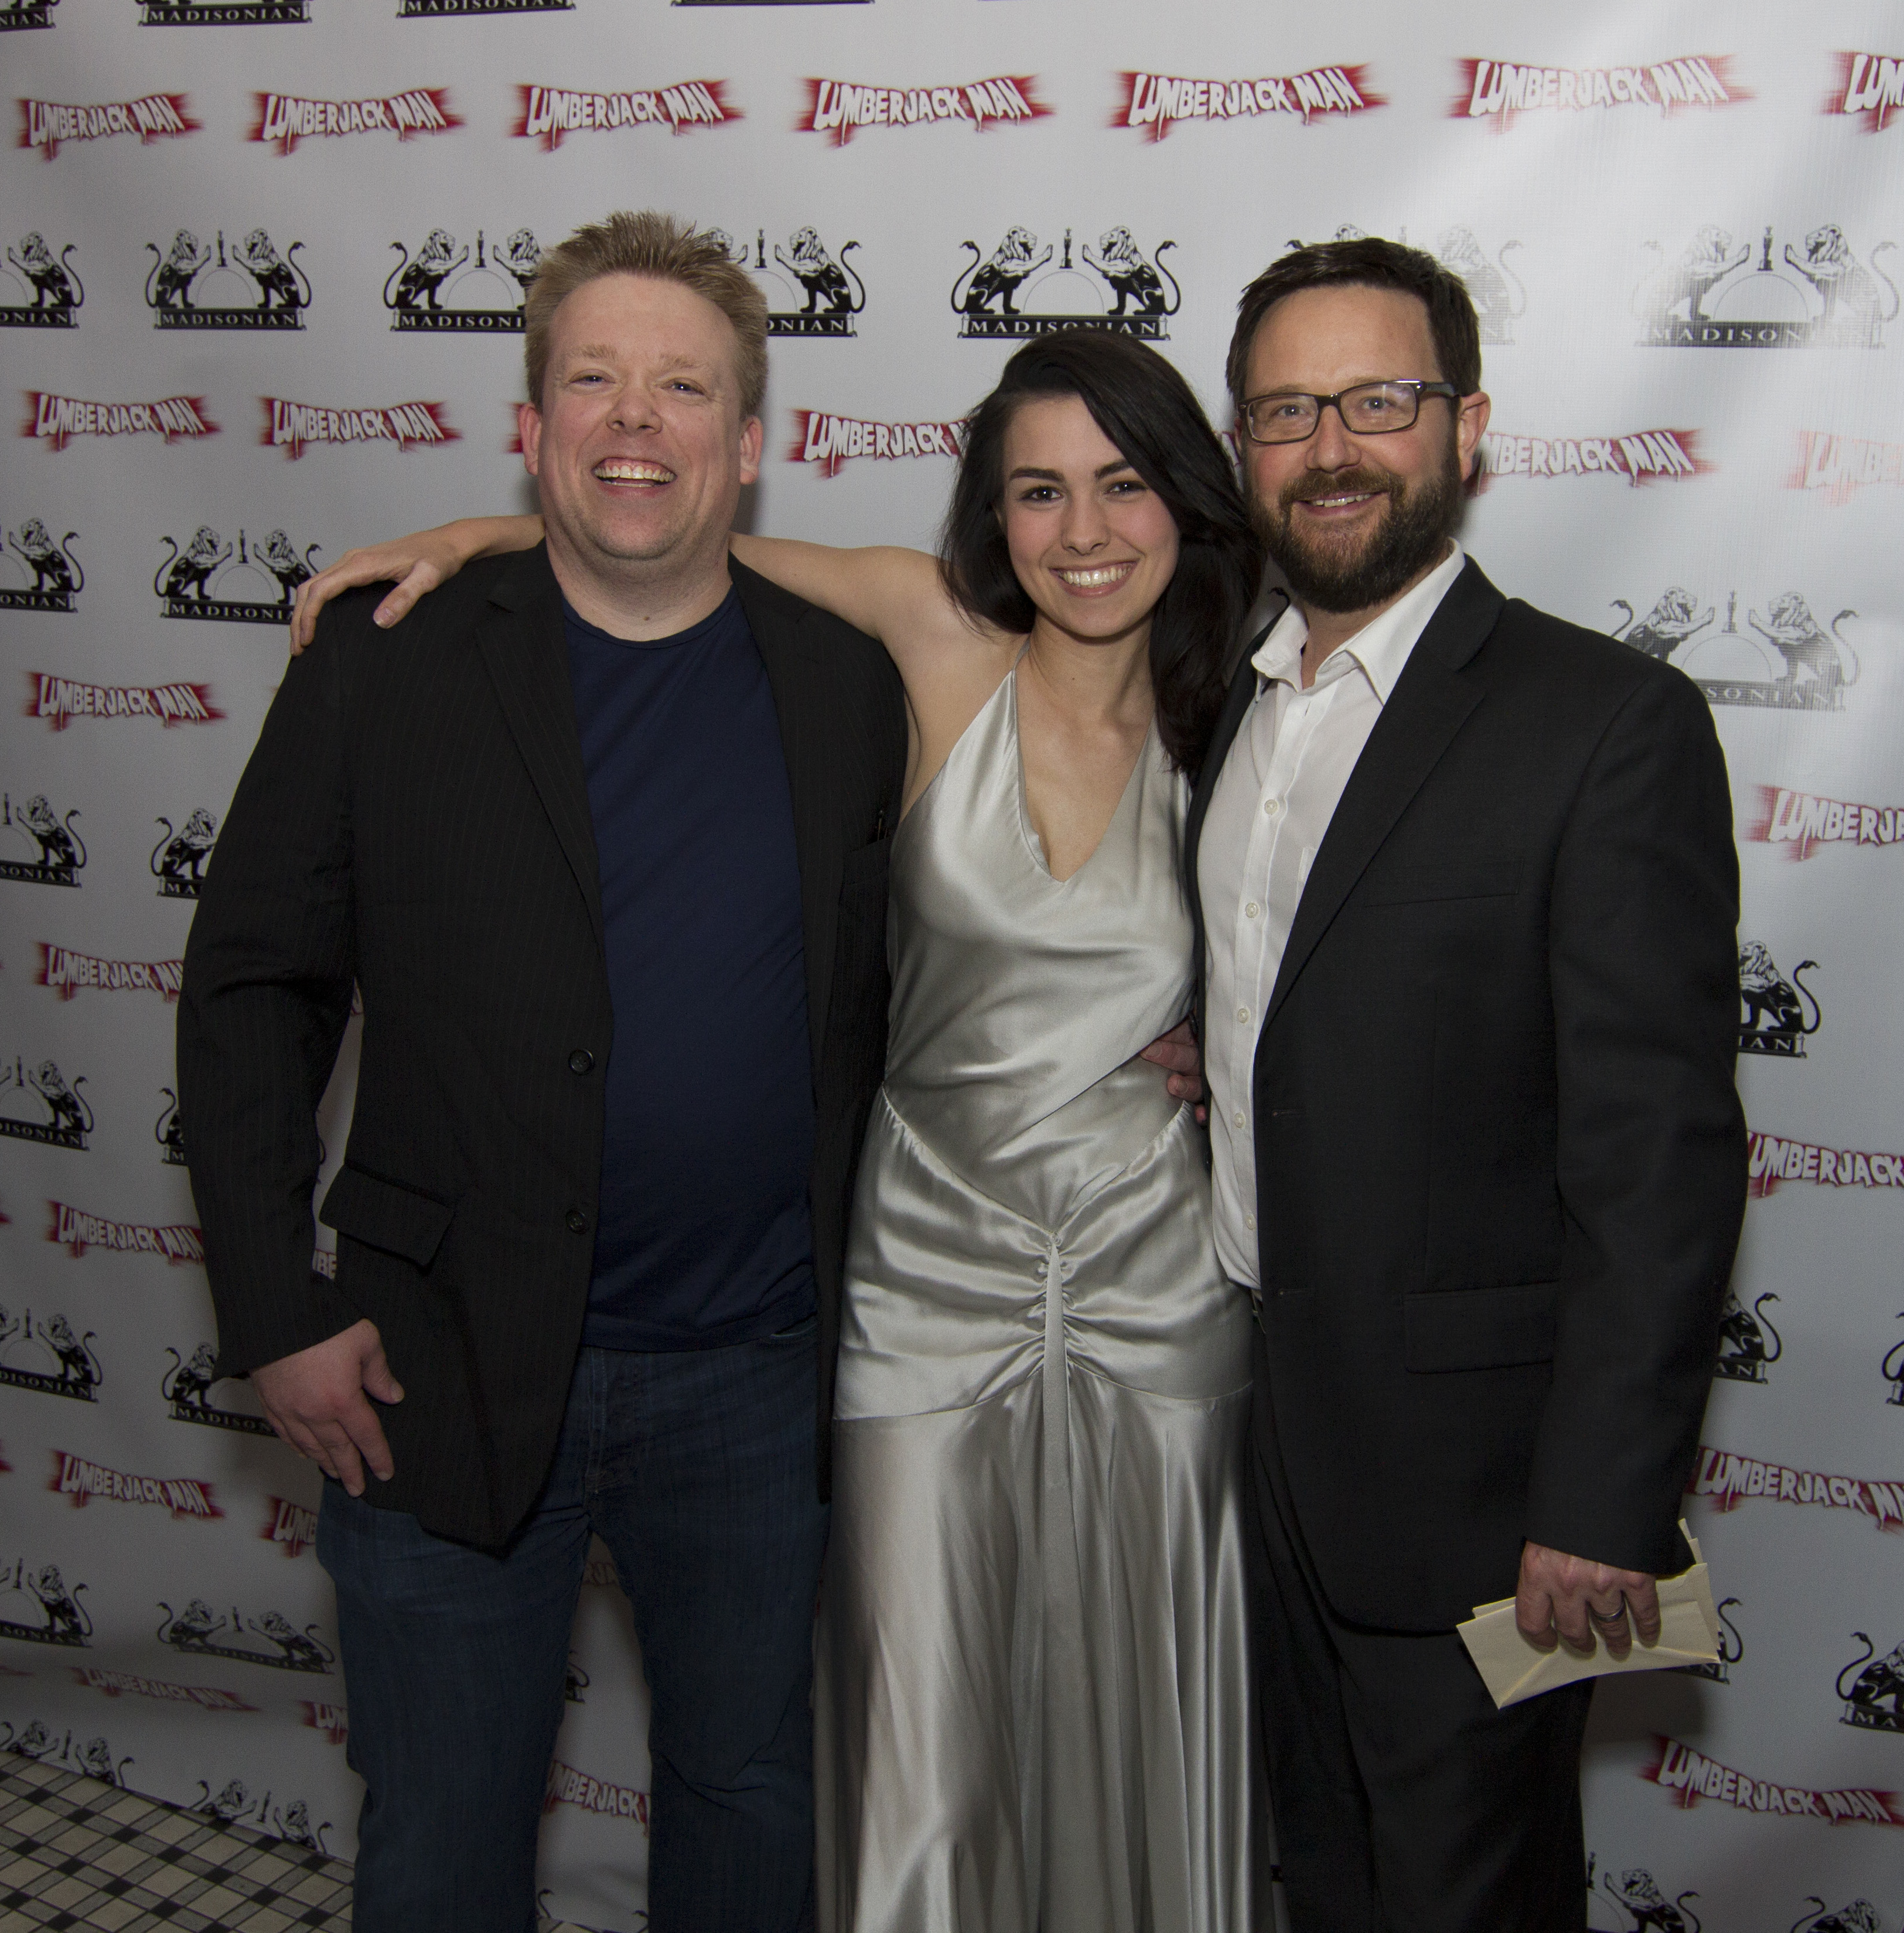 Ciara Flynn with director Josh Bear and producer Bill Meuhl at the Austin premier of Lumberjack Man!